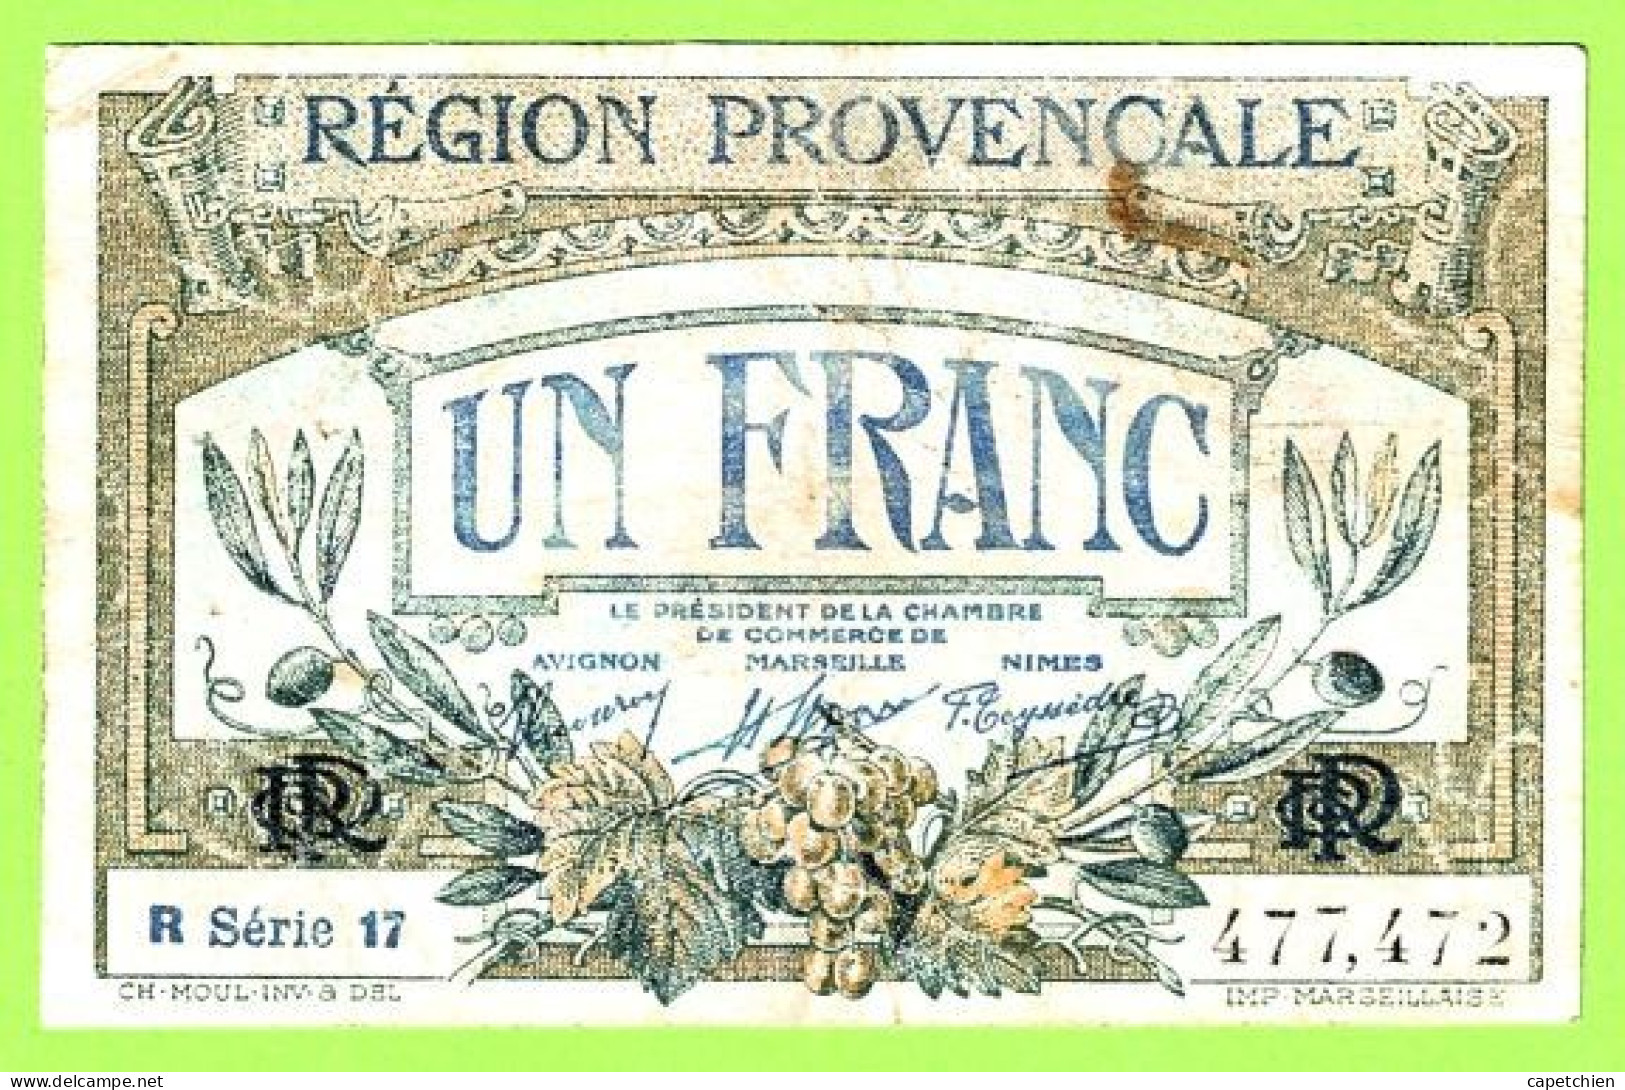 FRANCE / CHAMBRE De COMMERCE / REGION PROVENCALE / 1 FRANC / N° 477472 / R  SERIE 17 - Chamber Of Commerce